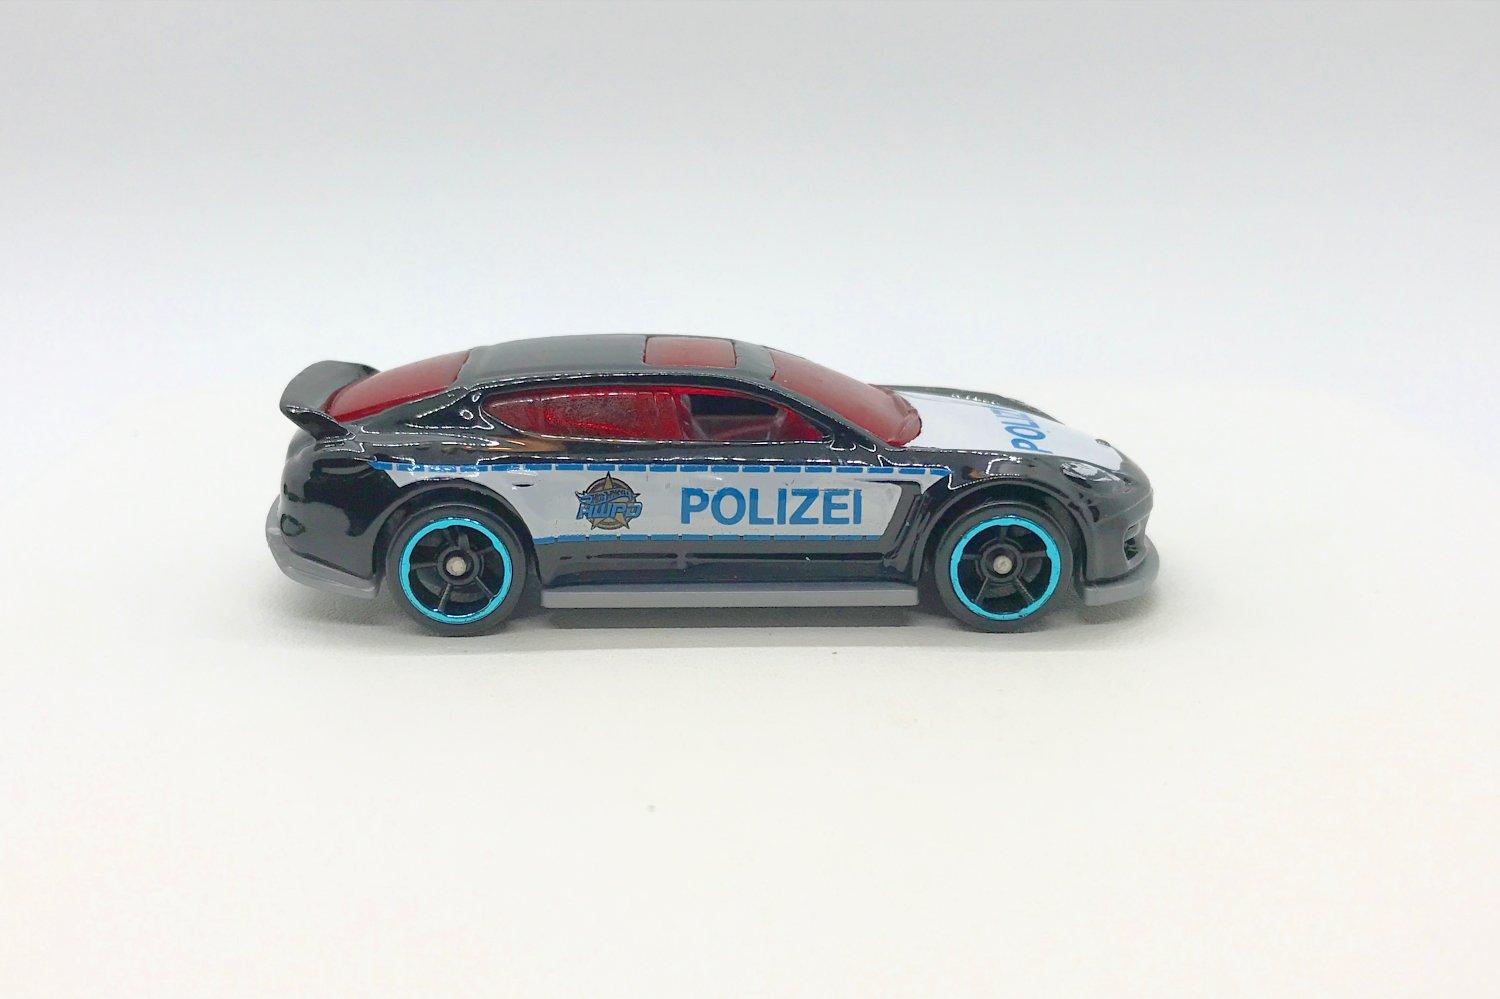 Hot Wheels Black Porsche Polizei Panamera (2019) - Lamoree’s Vintage